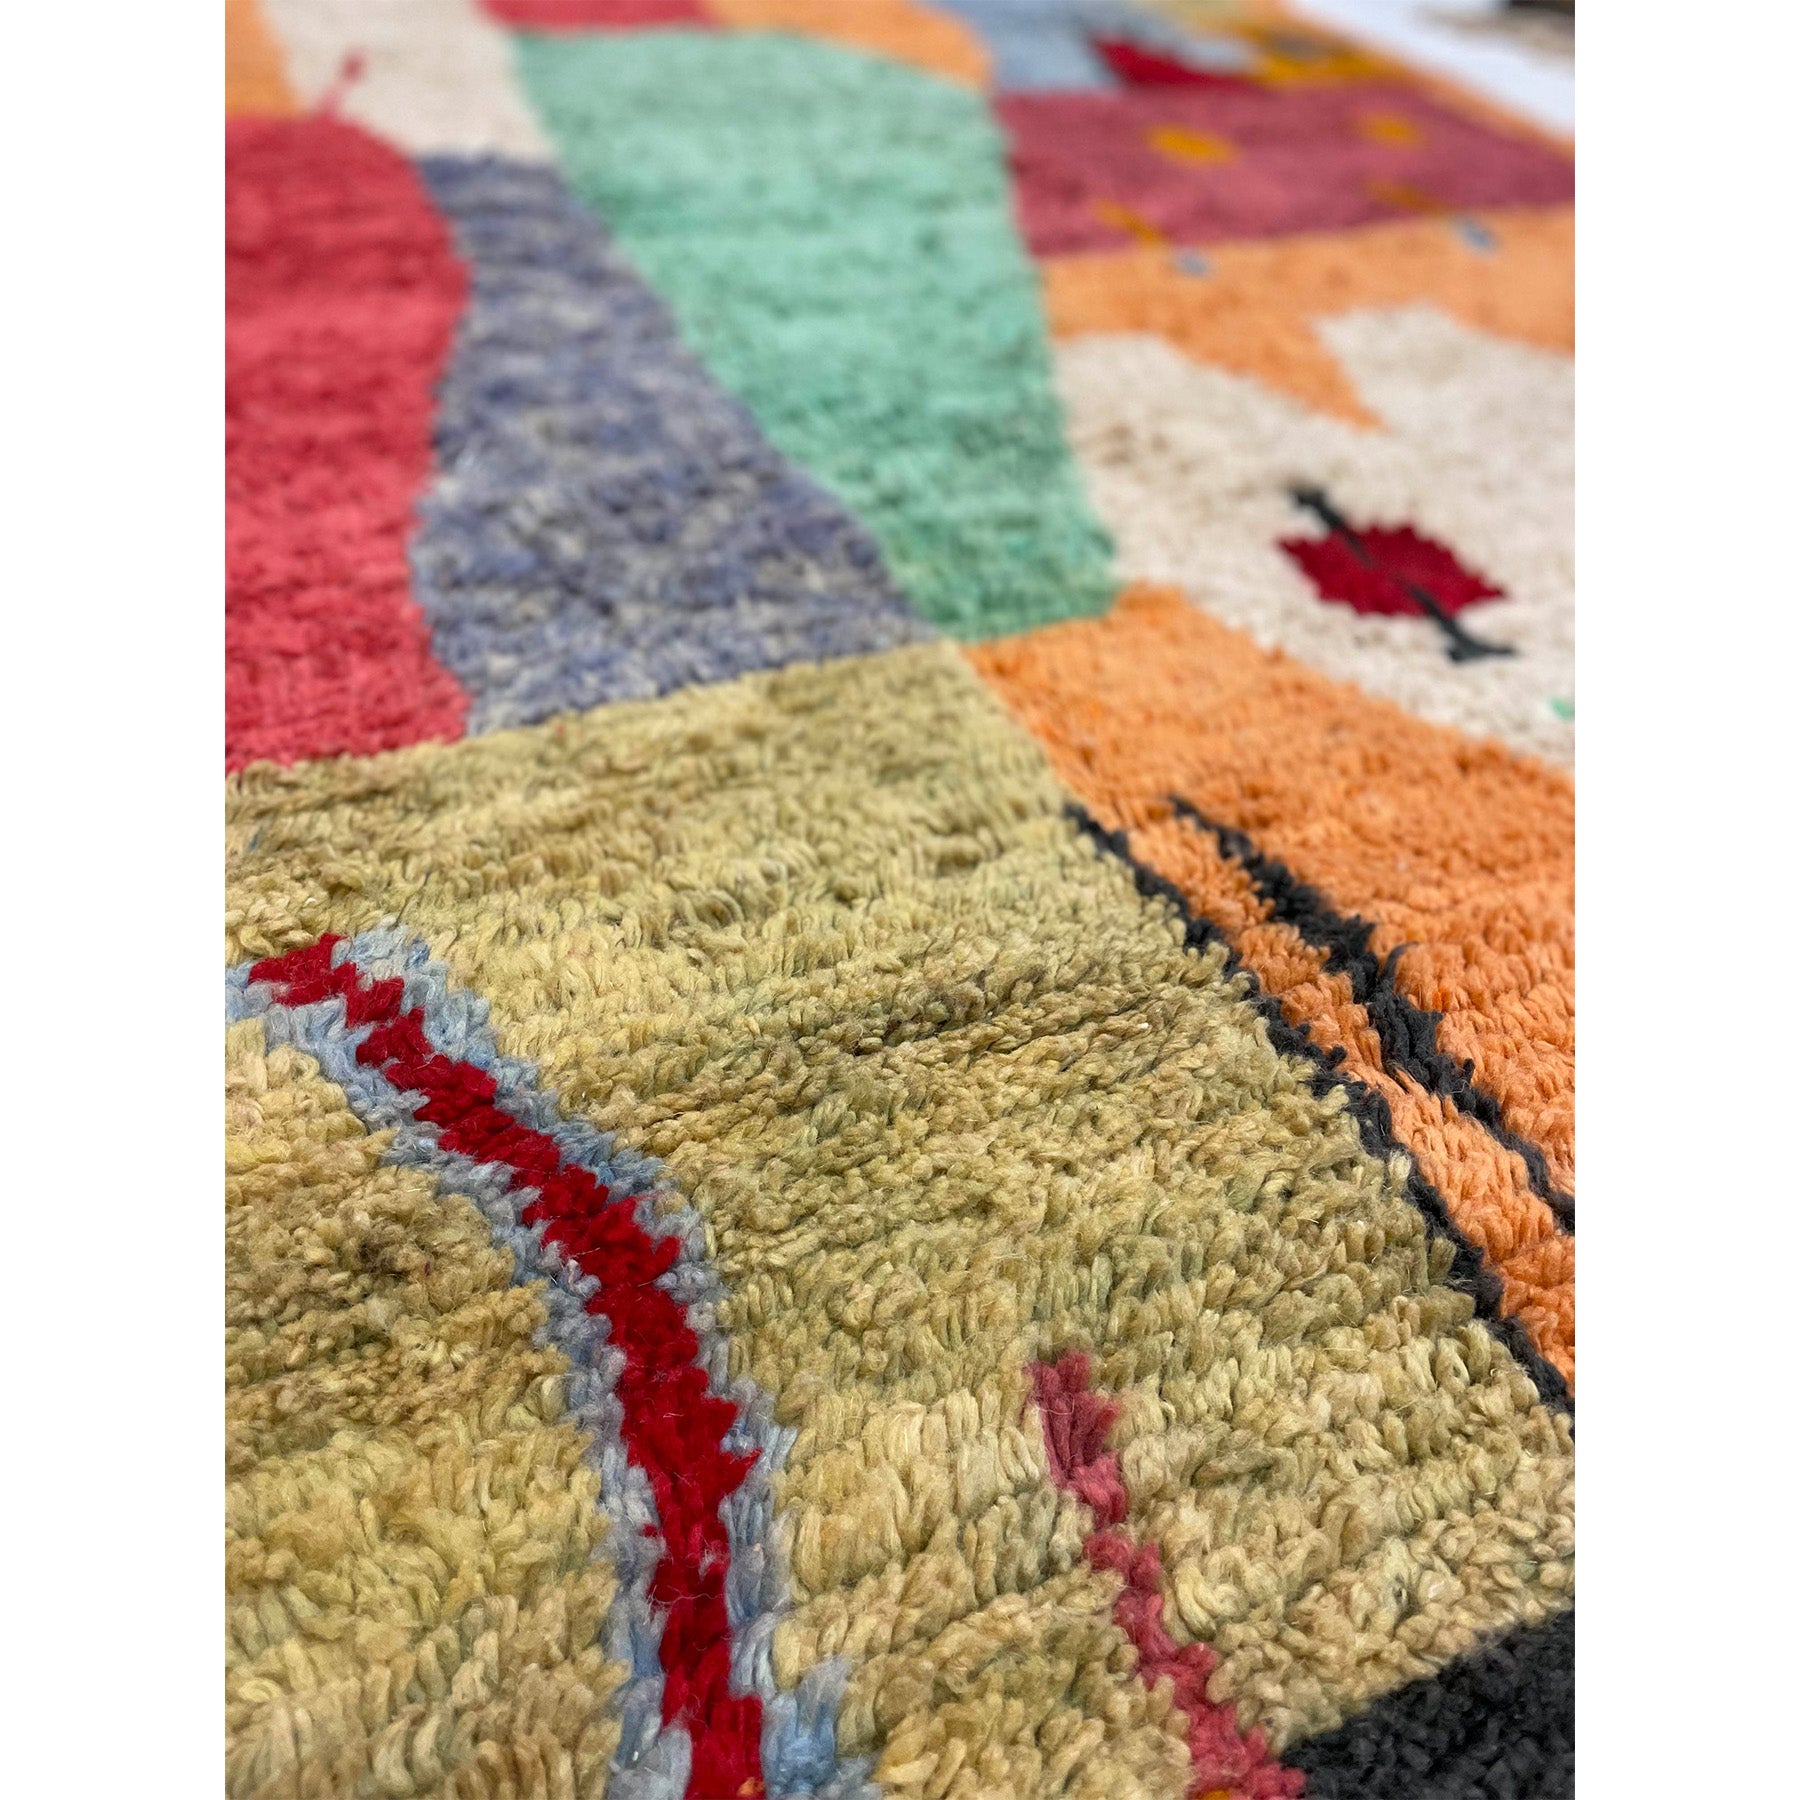 Art deco Moroccan area rug in army green, periwinkle, sea foam green, orange, and red - Kantara | Moroccan Rugs